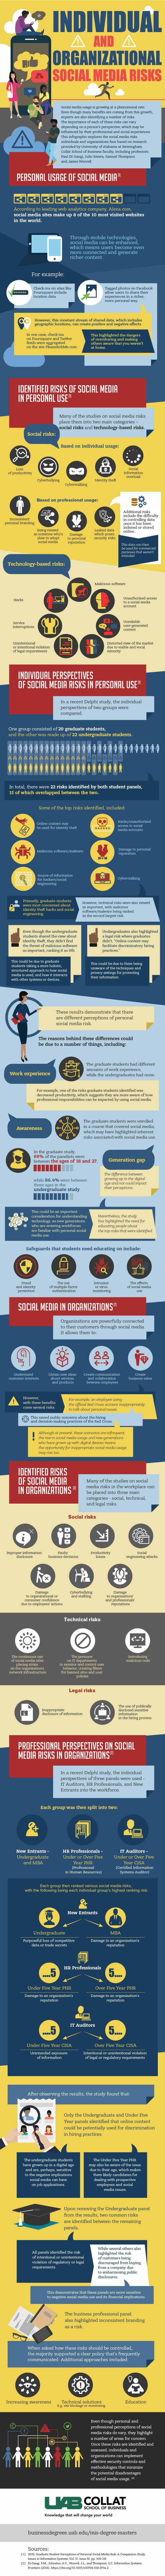 Individual & Organizational Social Media Risks 